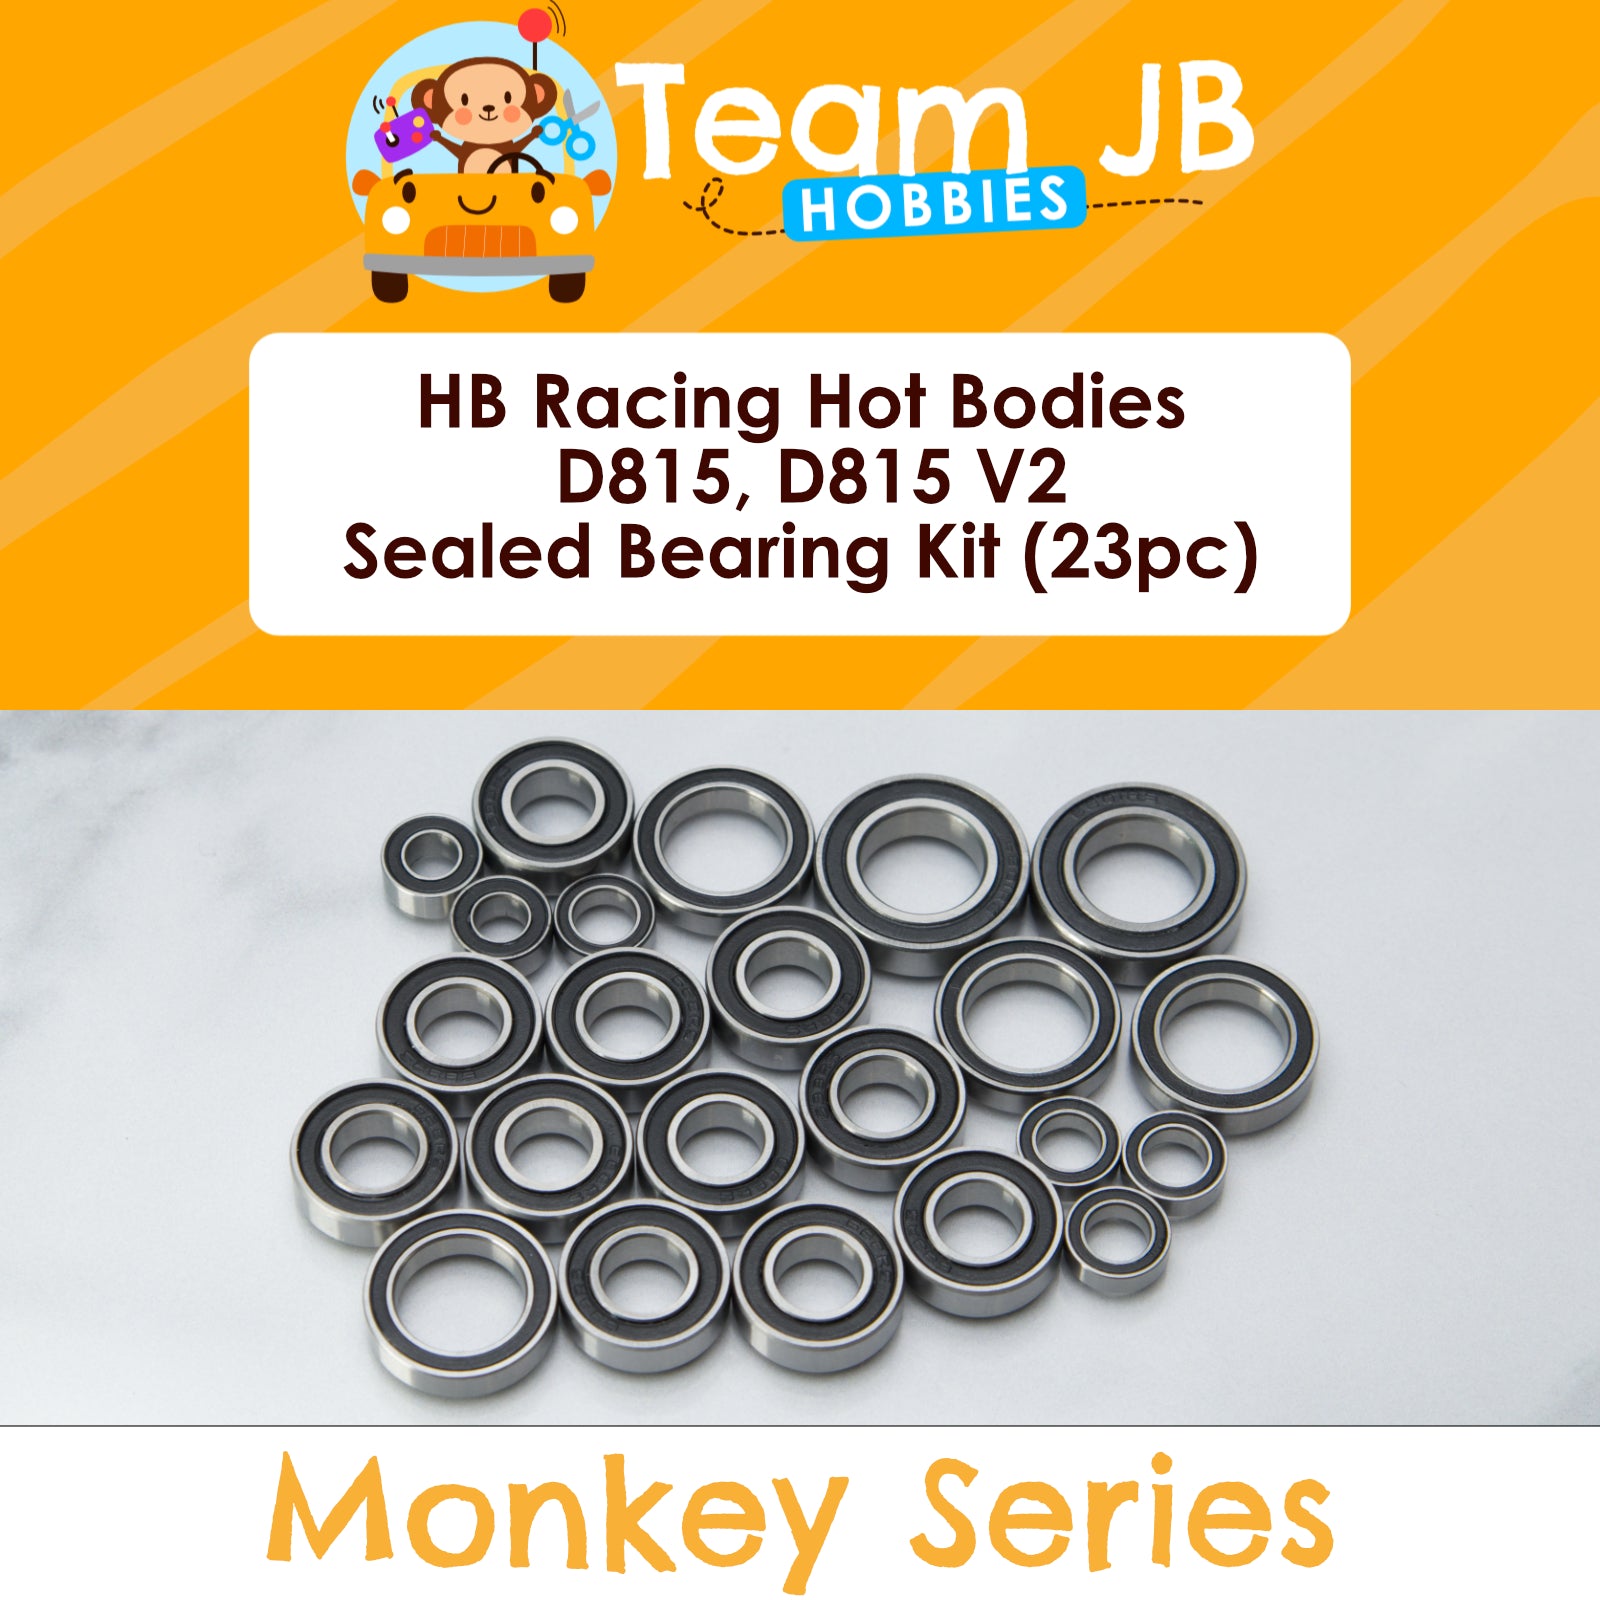 HB Racing Hot Bodies D815, Hot Bodies D815 V2, Hot Bodies Ty Tessmann D815 - Sealed Bearing Kit